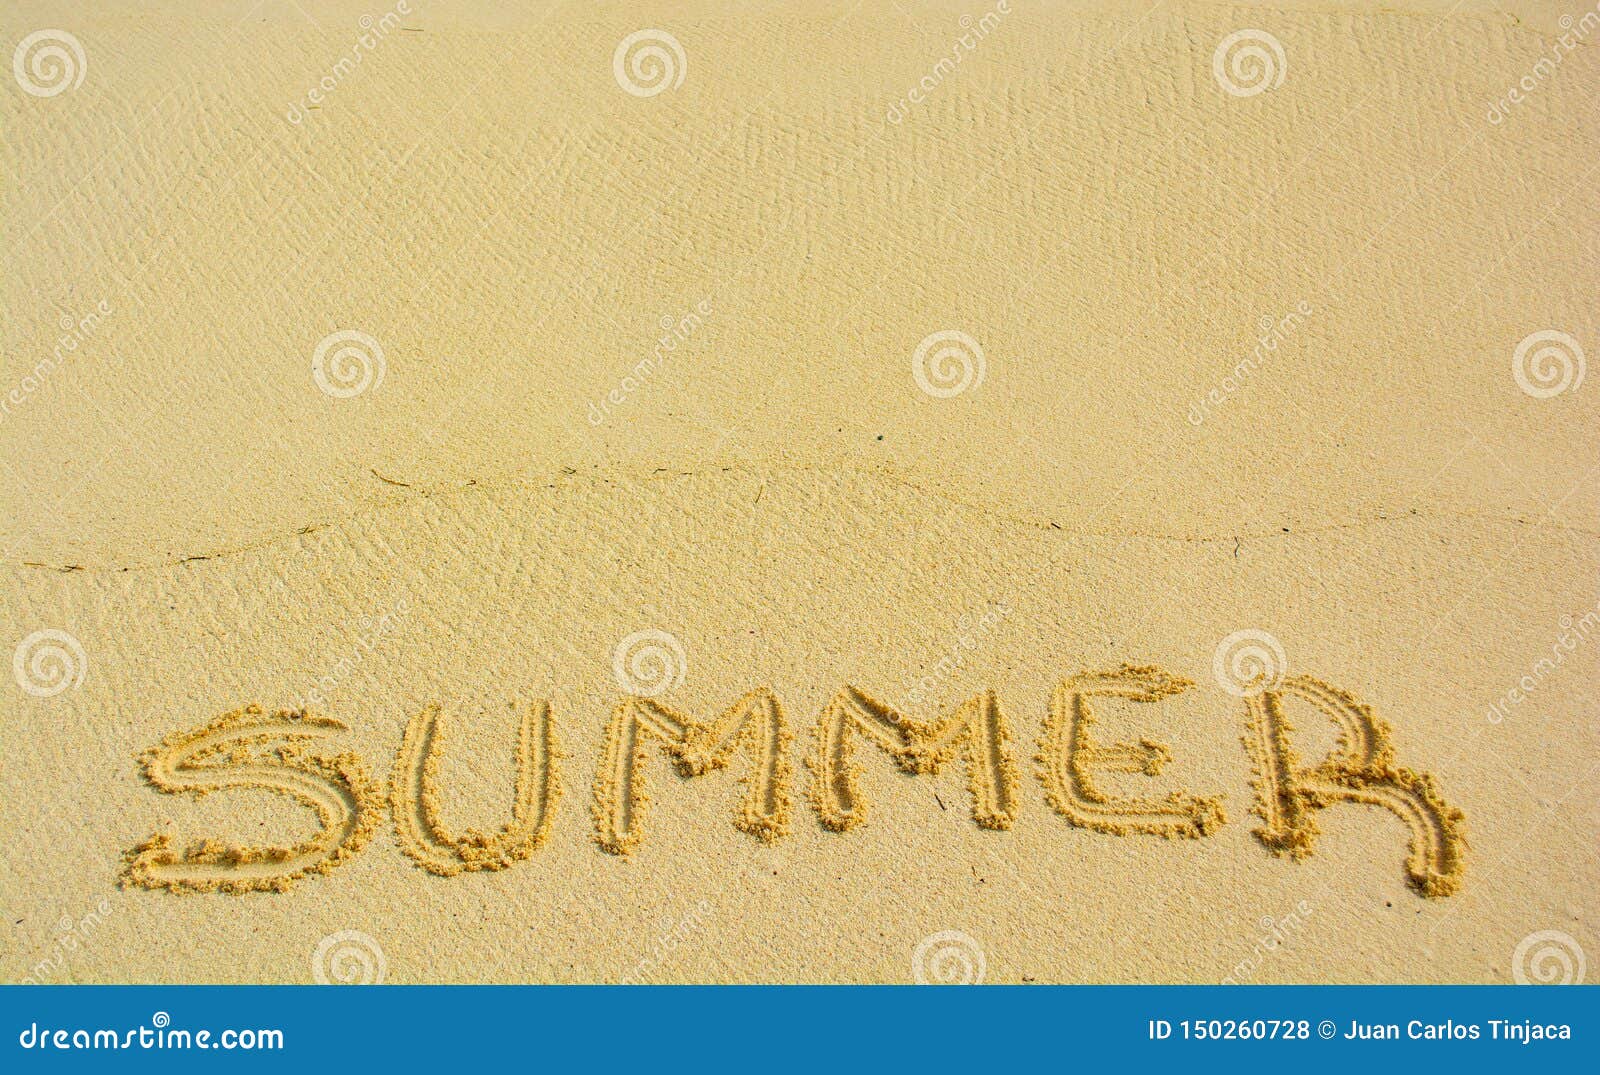 Summer Written in Sand on Beach